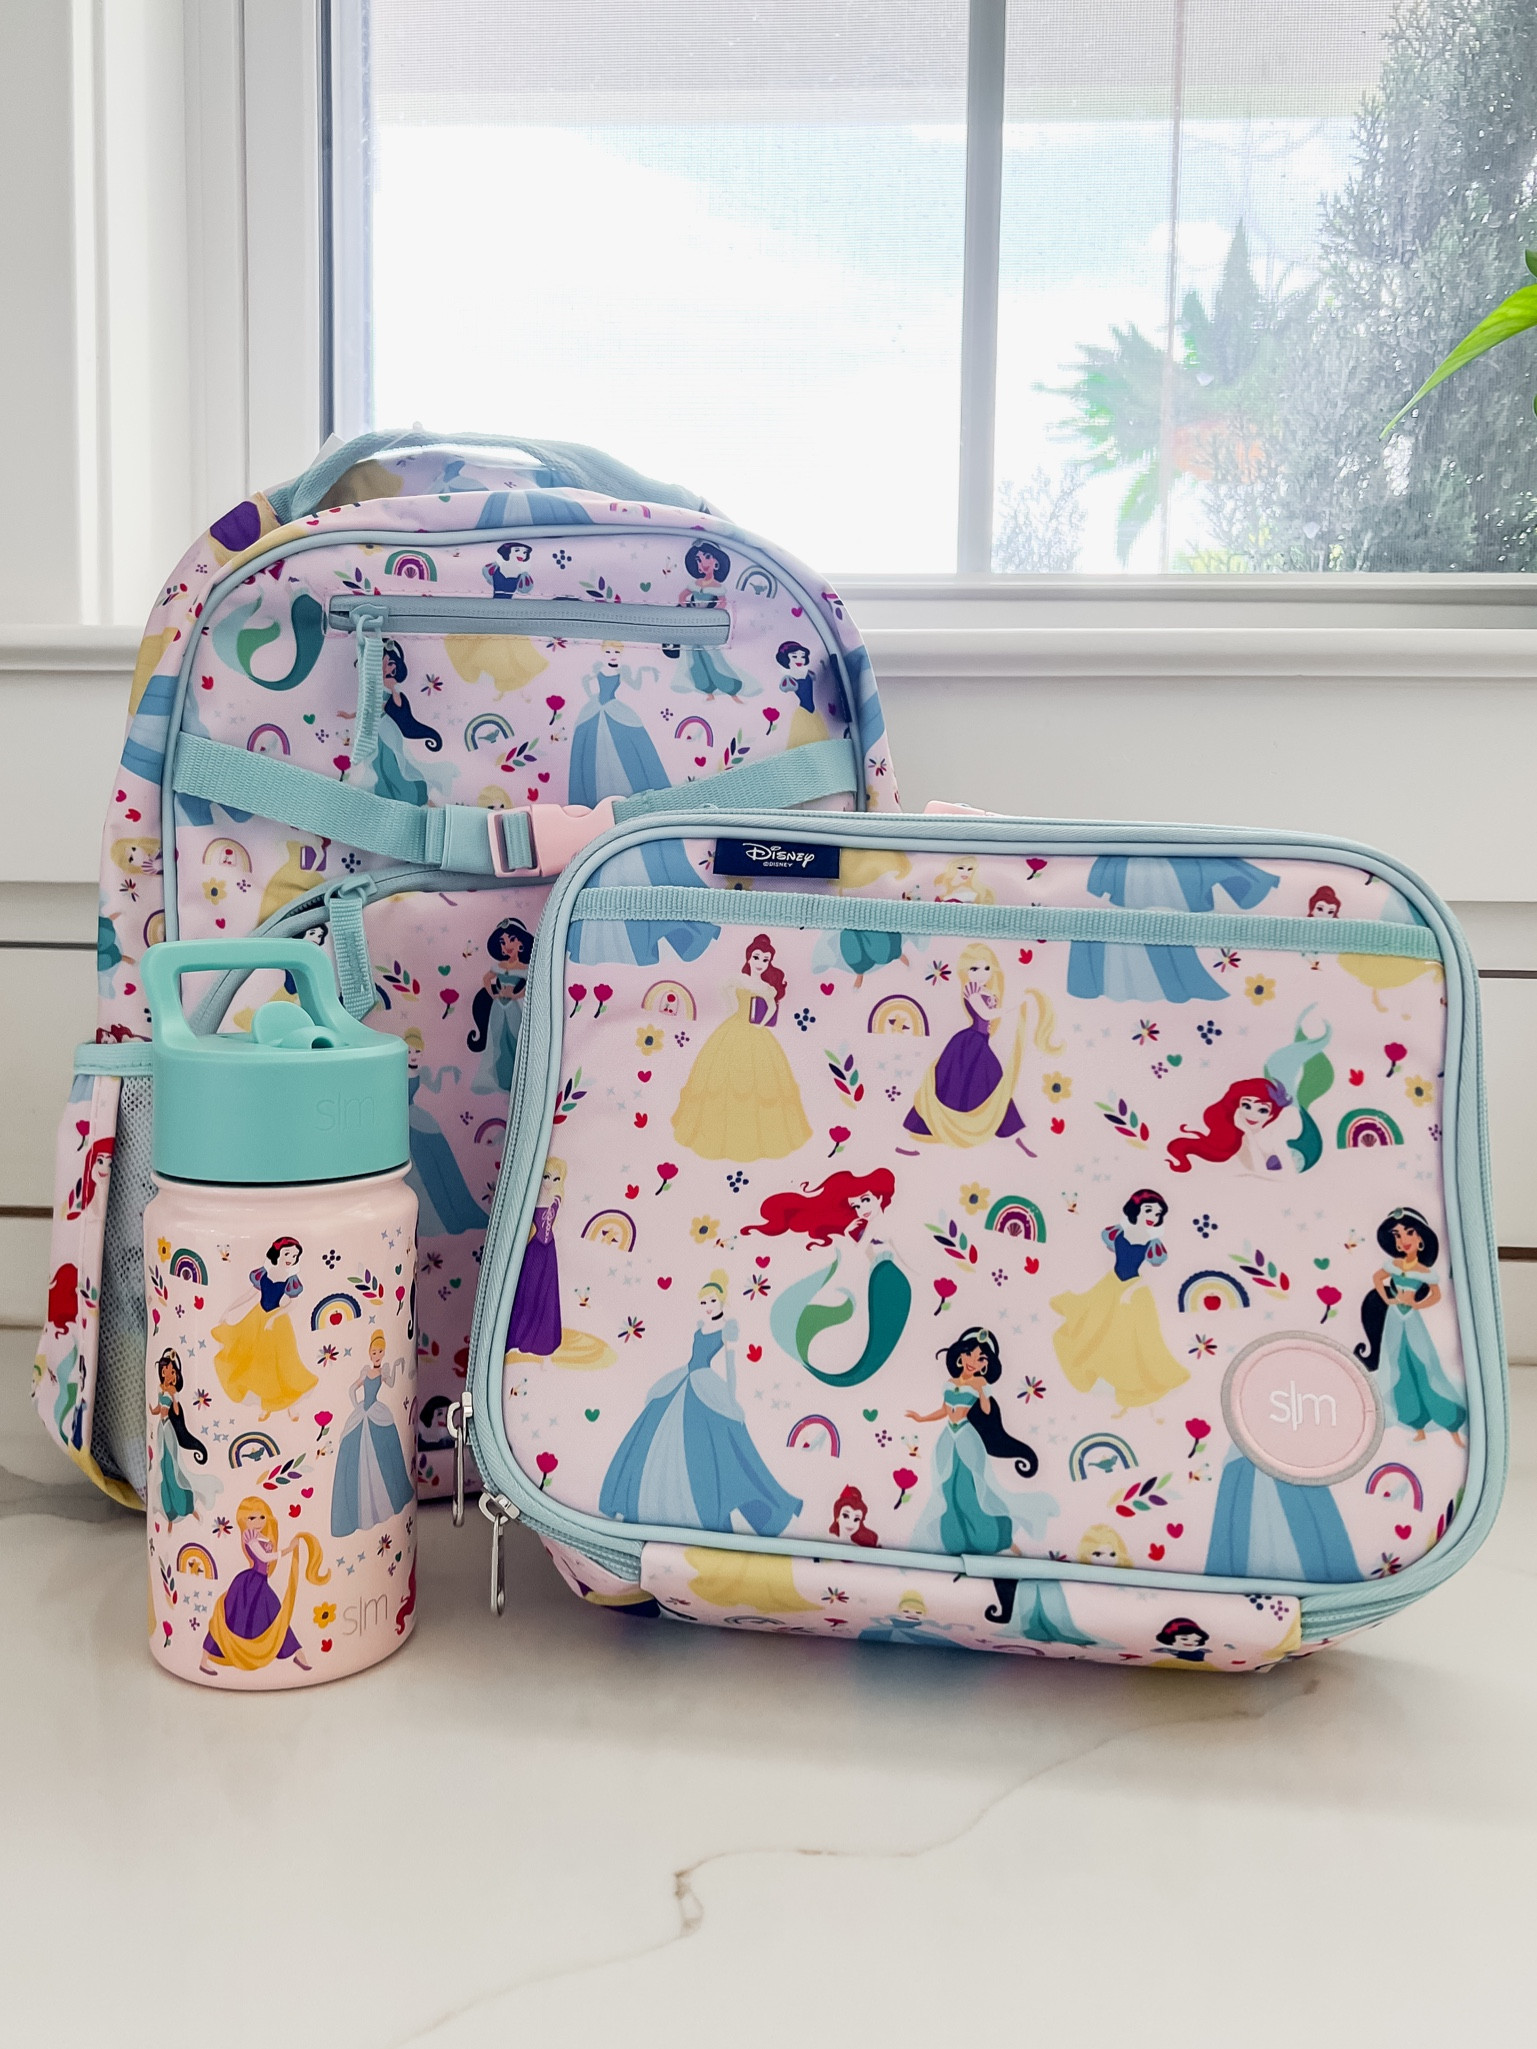 Disney Girl's Princess Lunch Bag with Handle